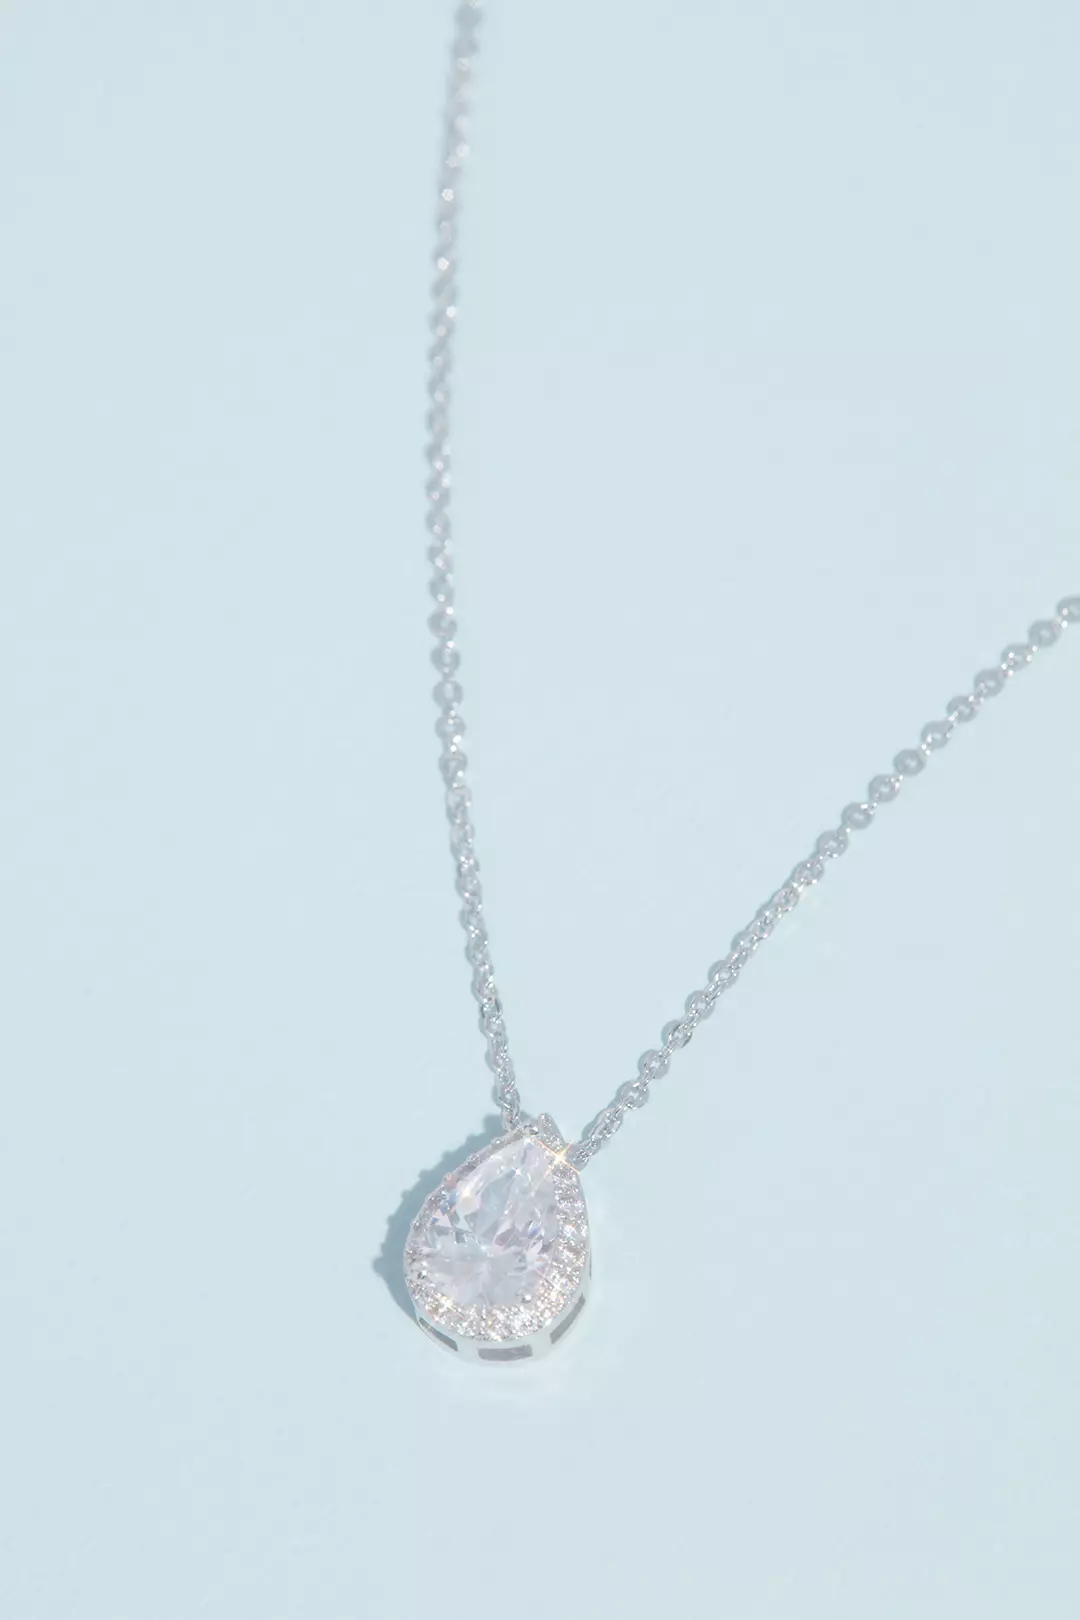 Haloed Pear Shaped Cubic Zirconia Pendant Necklace Image 2